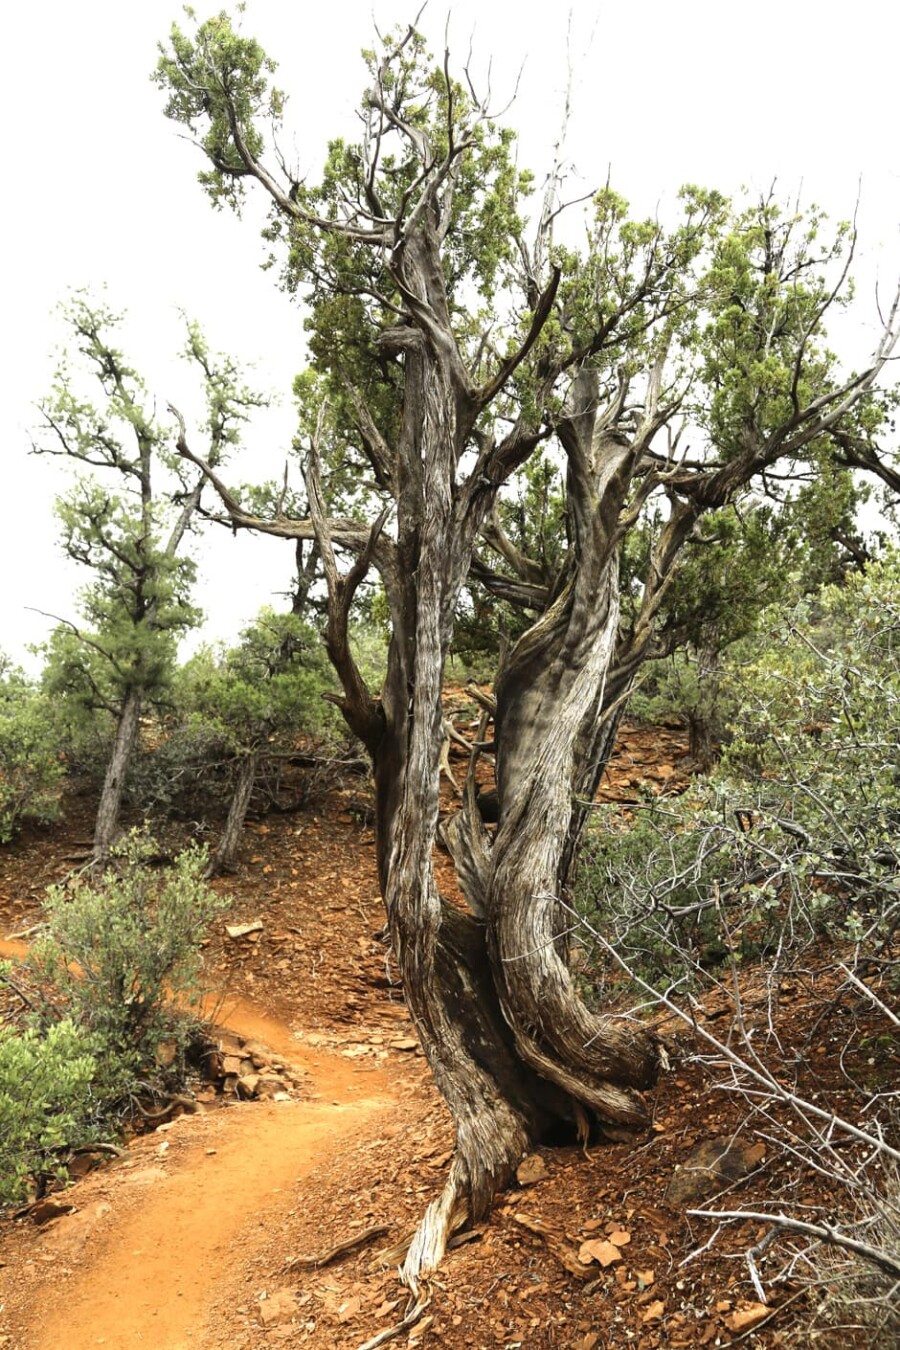 Hiking trail to a vortex in Sedona, California.